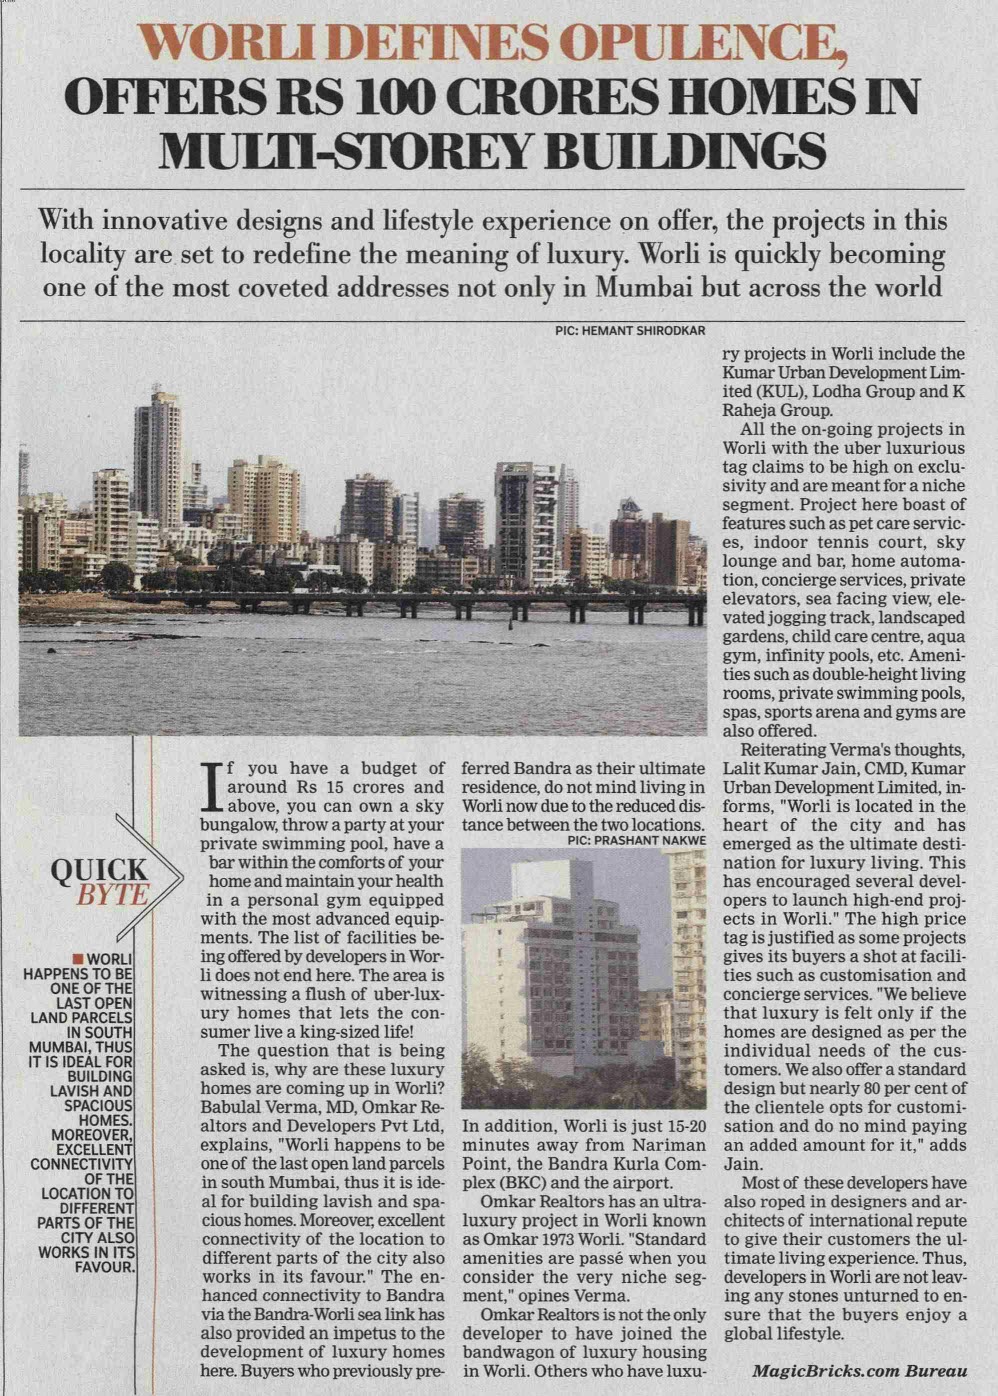 Worli defines opulence, offers Rs 100 crores homes in multi-storey buildings